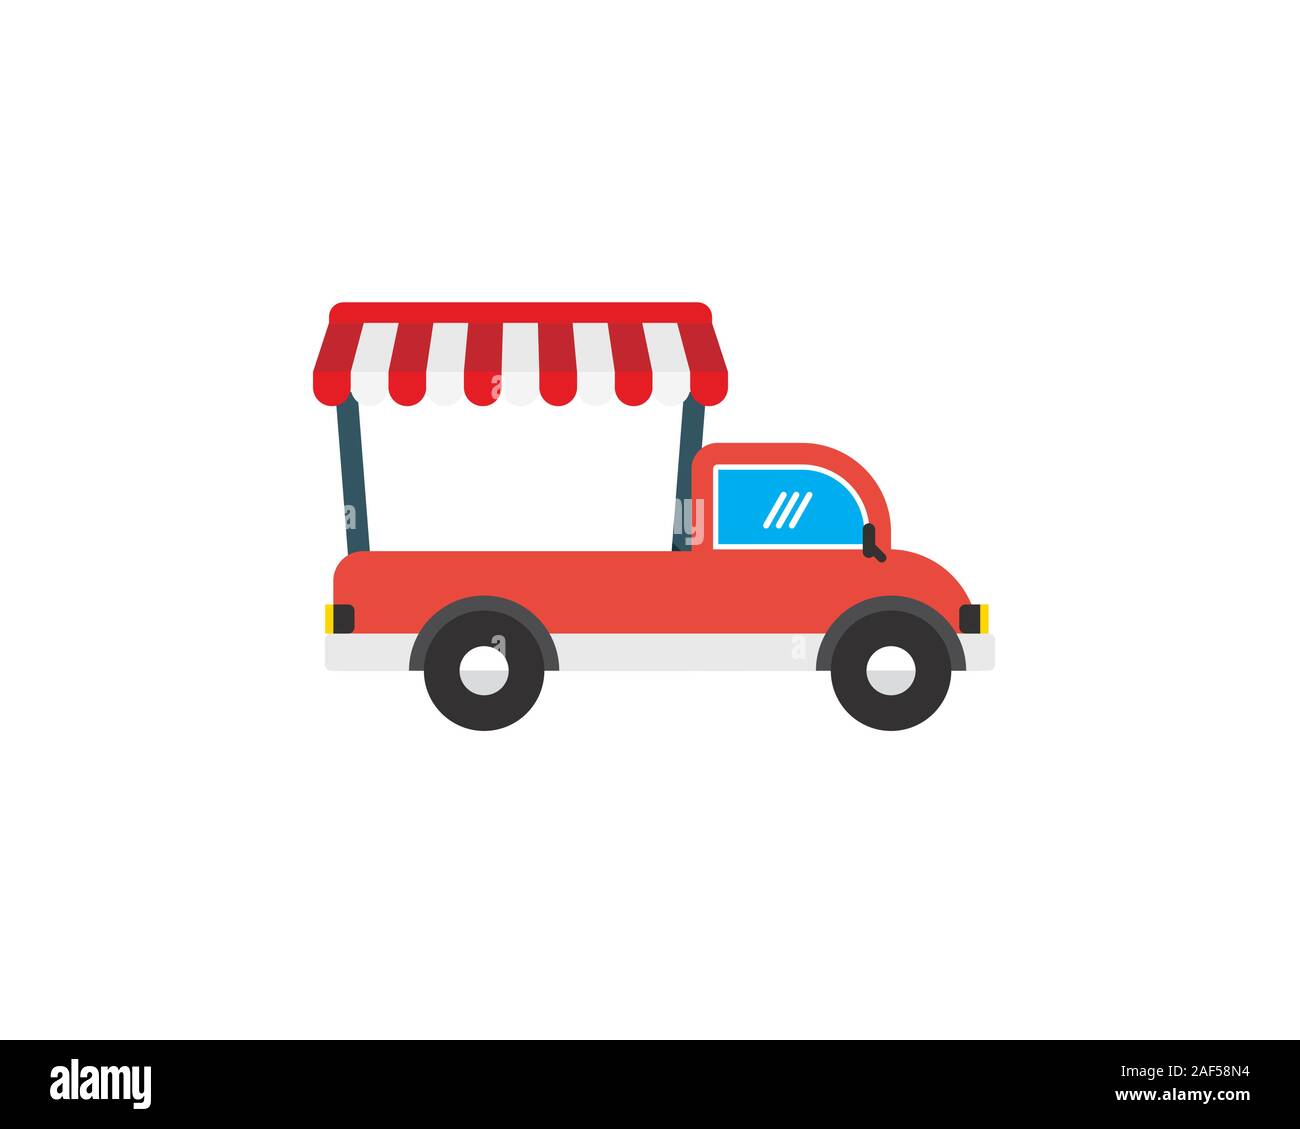 simple mobile shop illustration Stock Vector